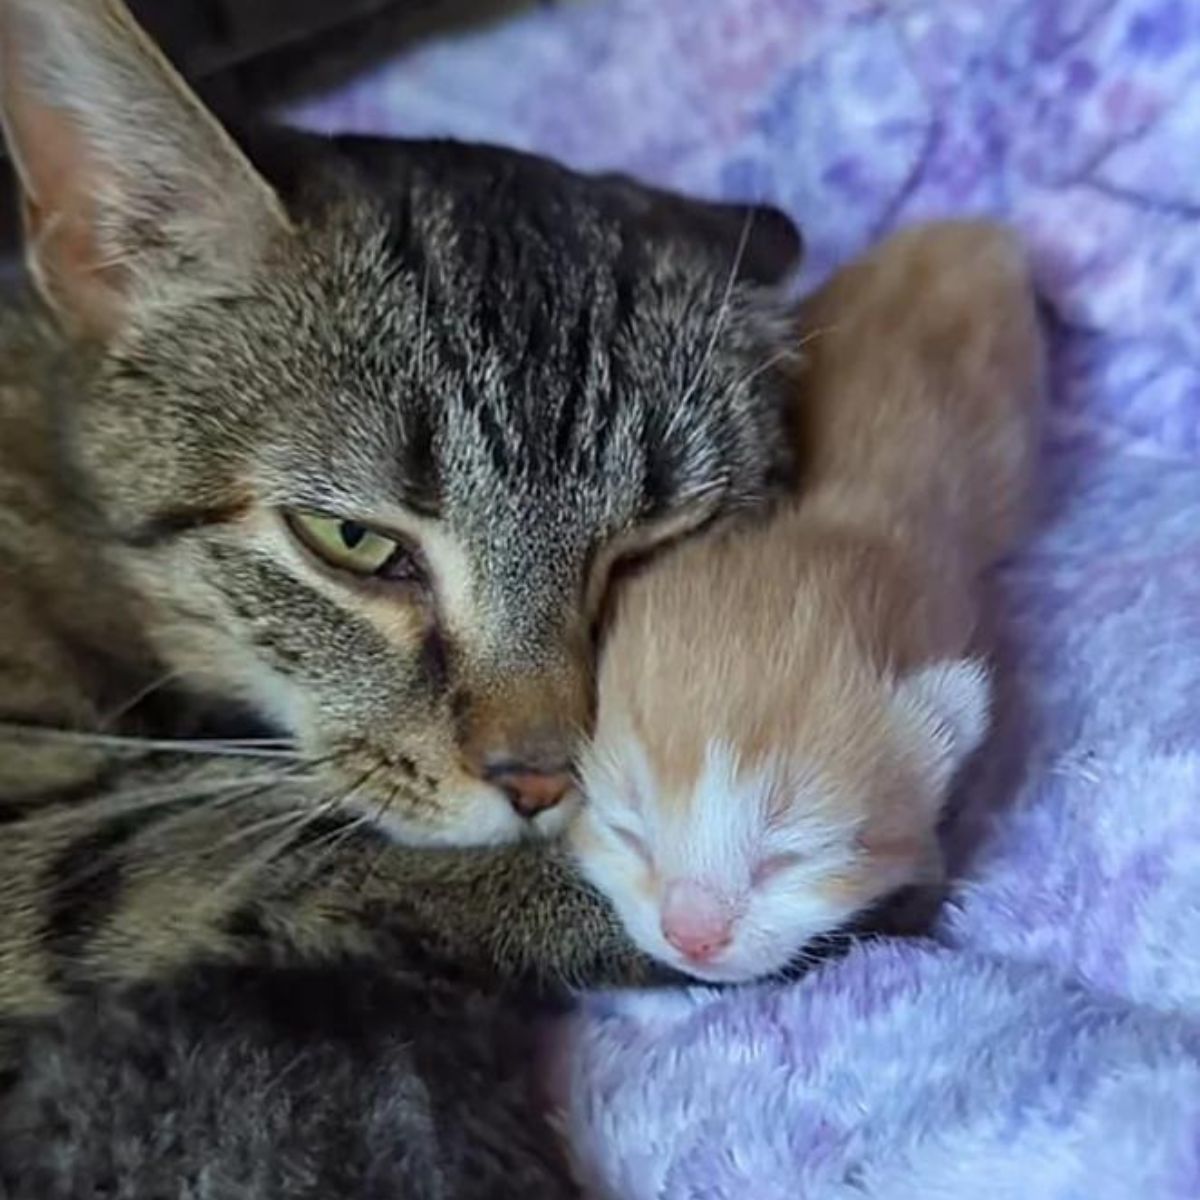 close-up photo of cat and orange kitten